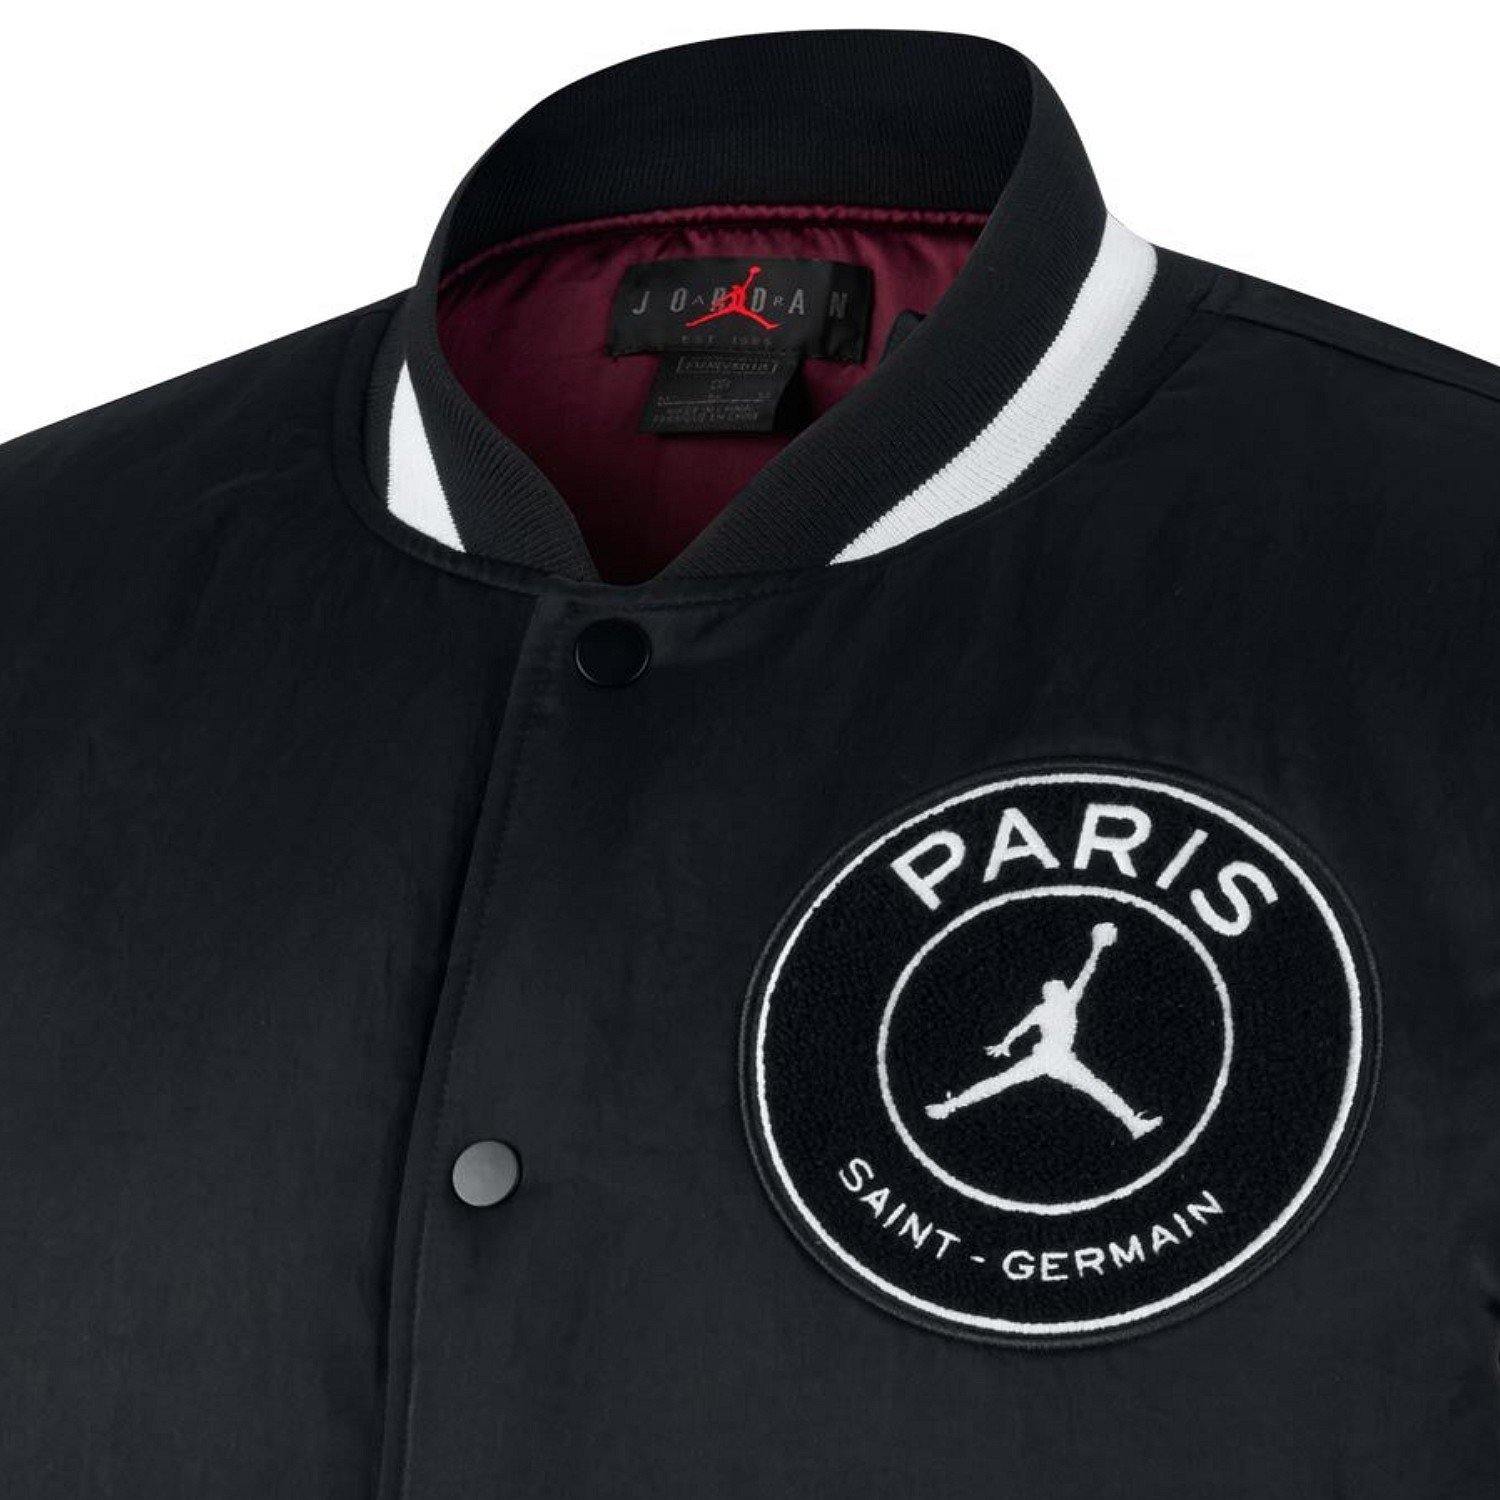 PSG x Jordan Coach jacket on Mercari | Mens outdoor jackets, Coach jacket,  Jackets